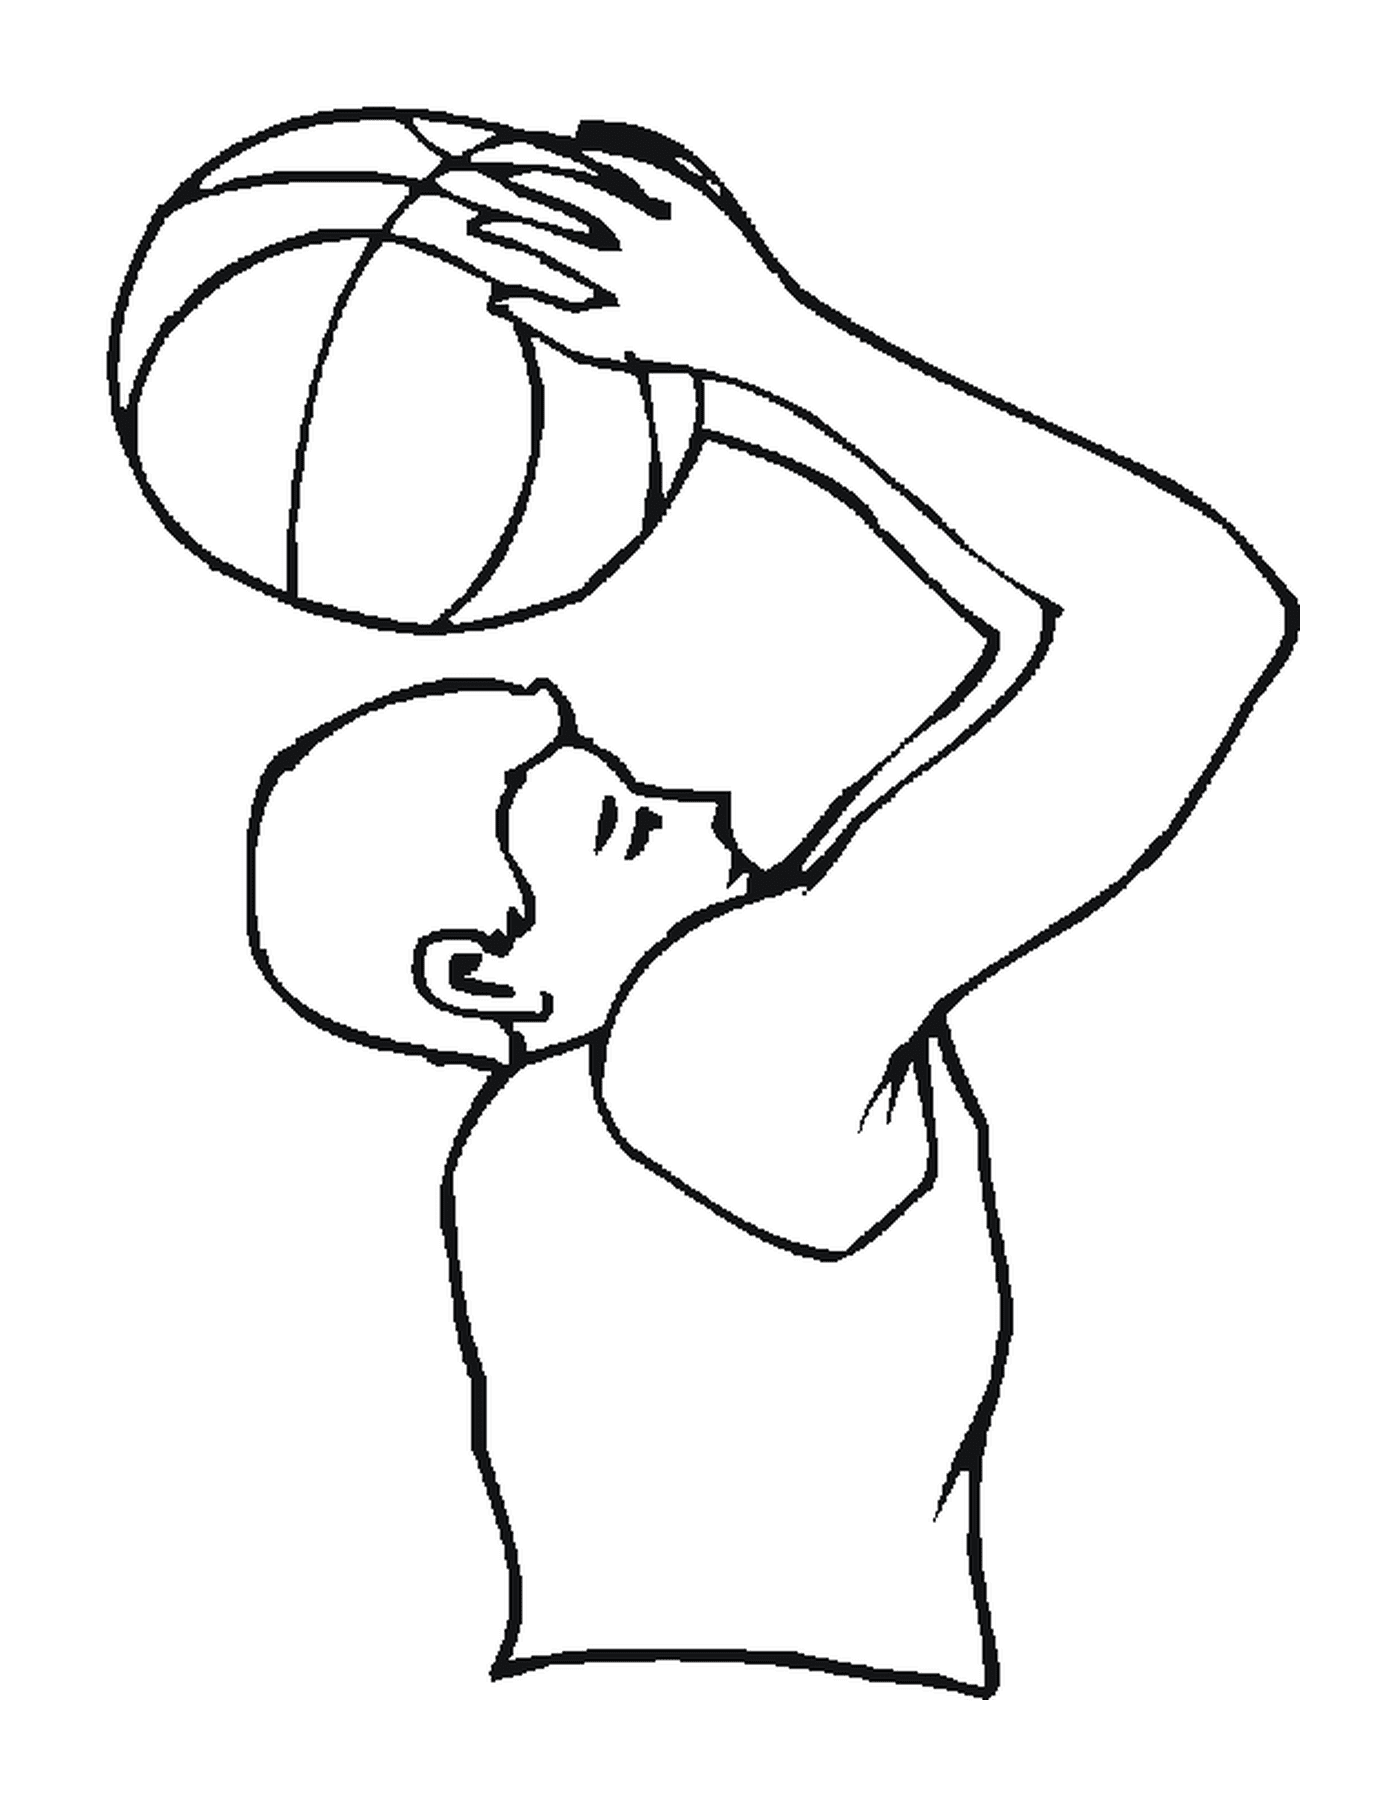  Un uomo tiene una palla da basket 